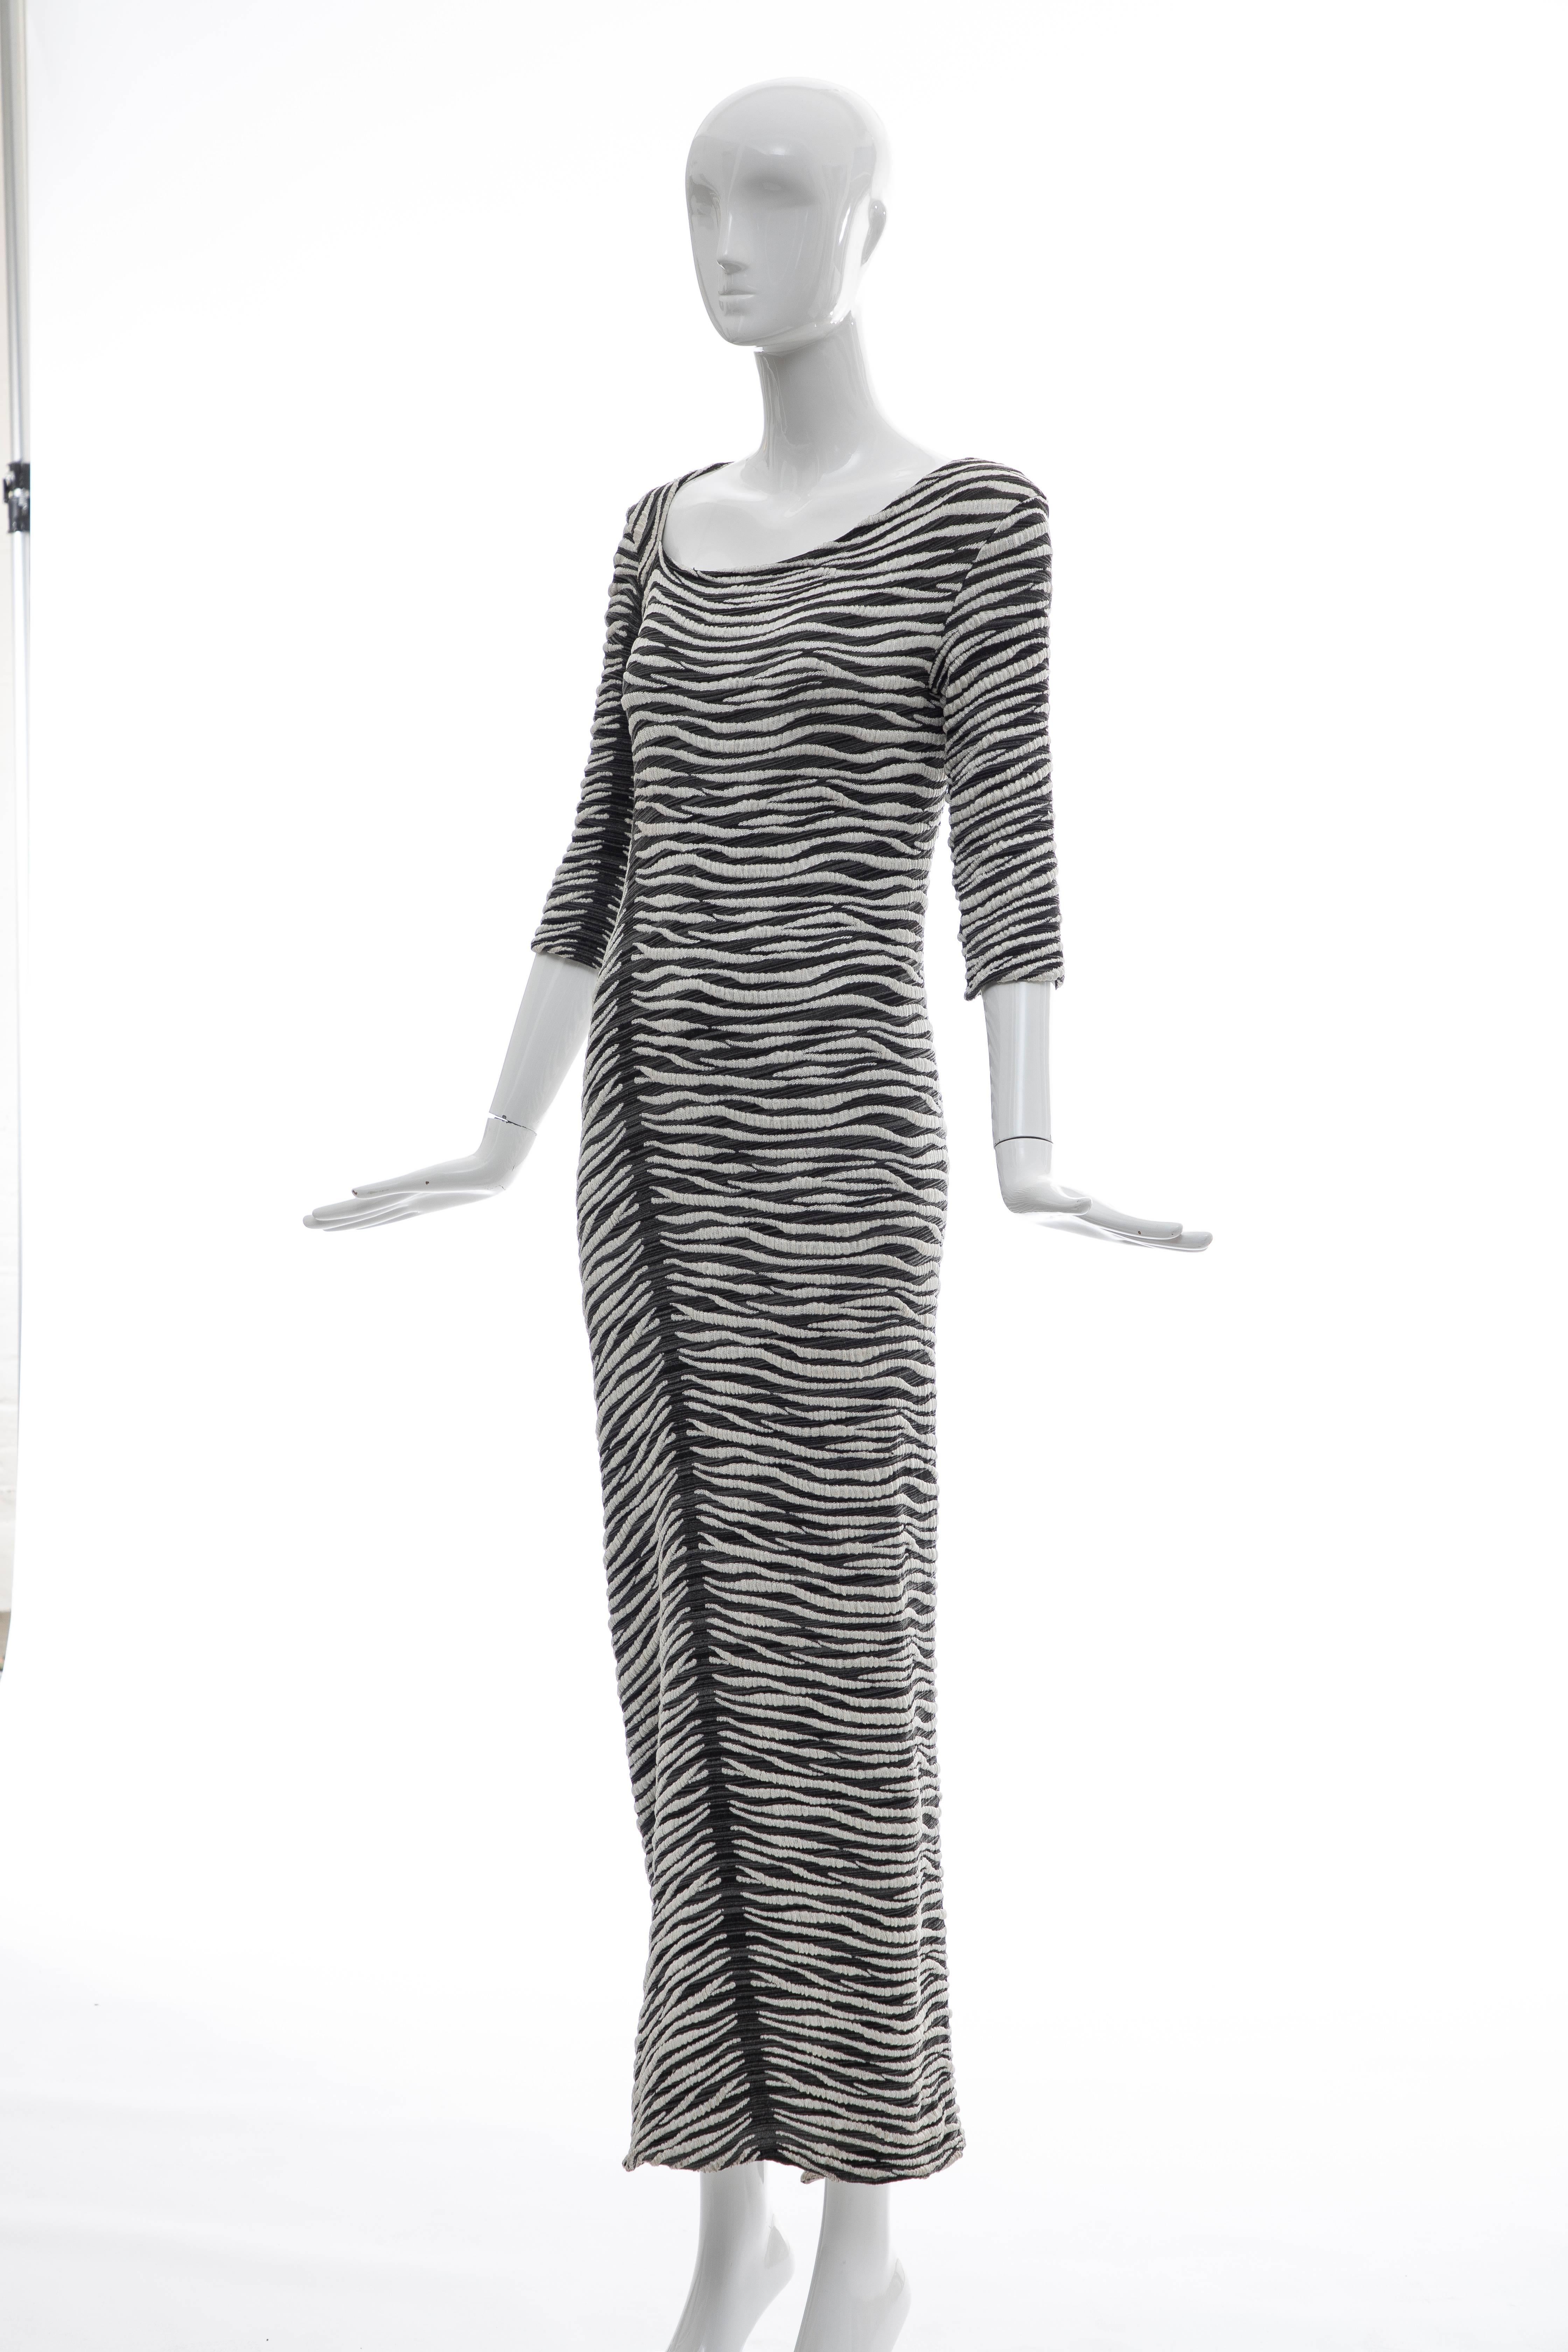 Gianfranco Ferre Long Sleeve Stretch Knit Dress, Circa 1990's For Sale 4